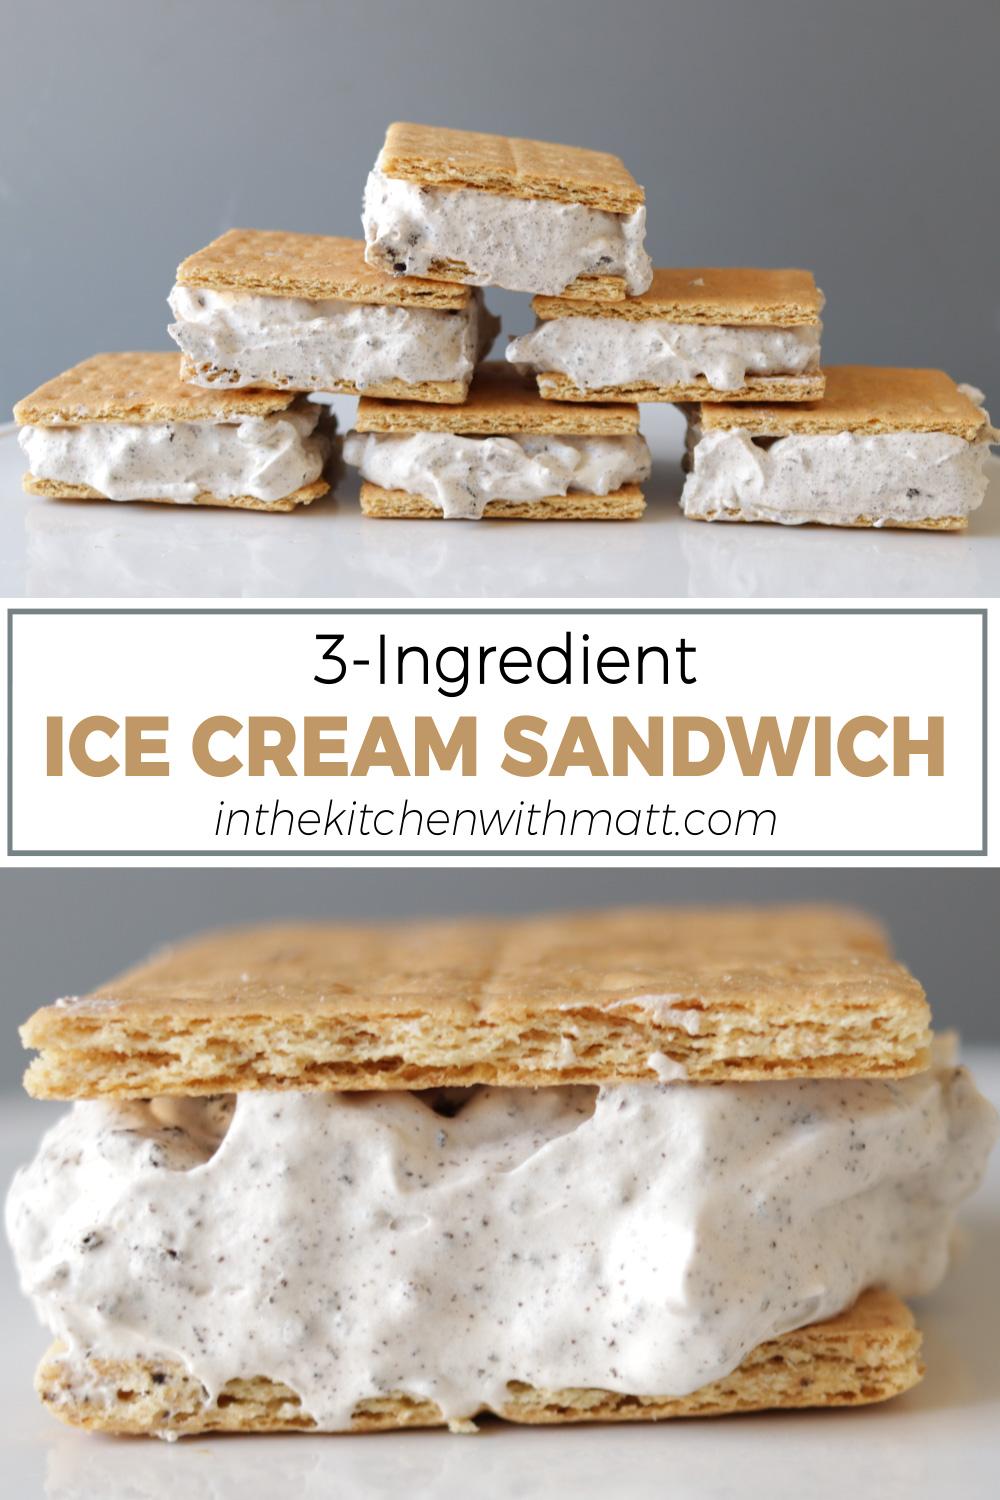 3 ingredient ice cream sandwich pin hi res.jpg